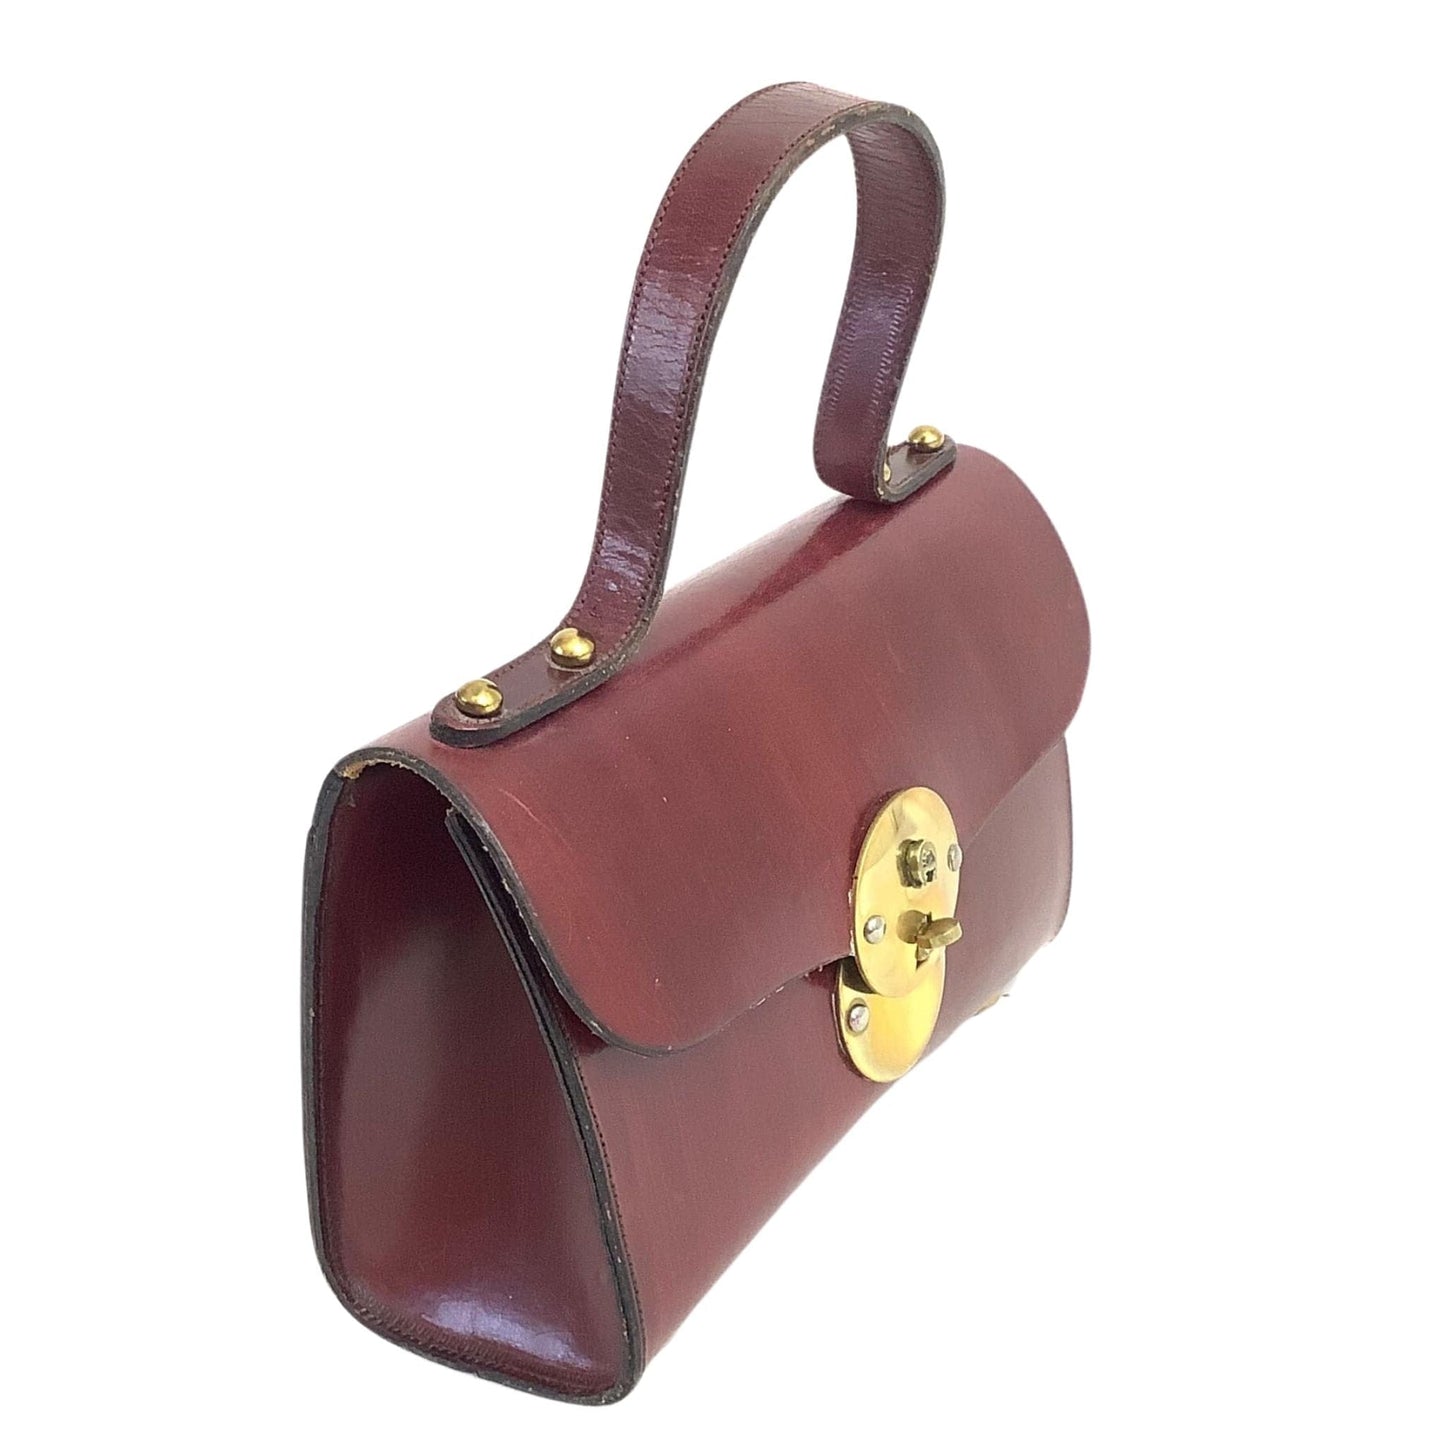 Vintage Aigner Mini Bag Burgundy / Leather / Vintage 1960s